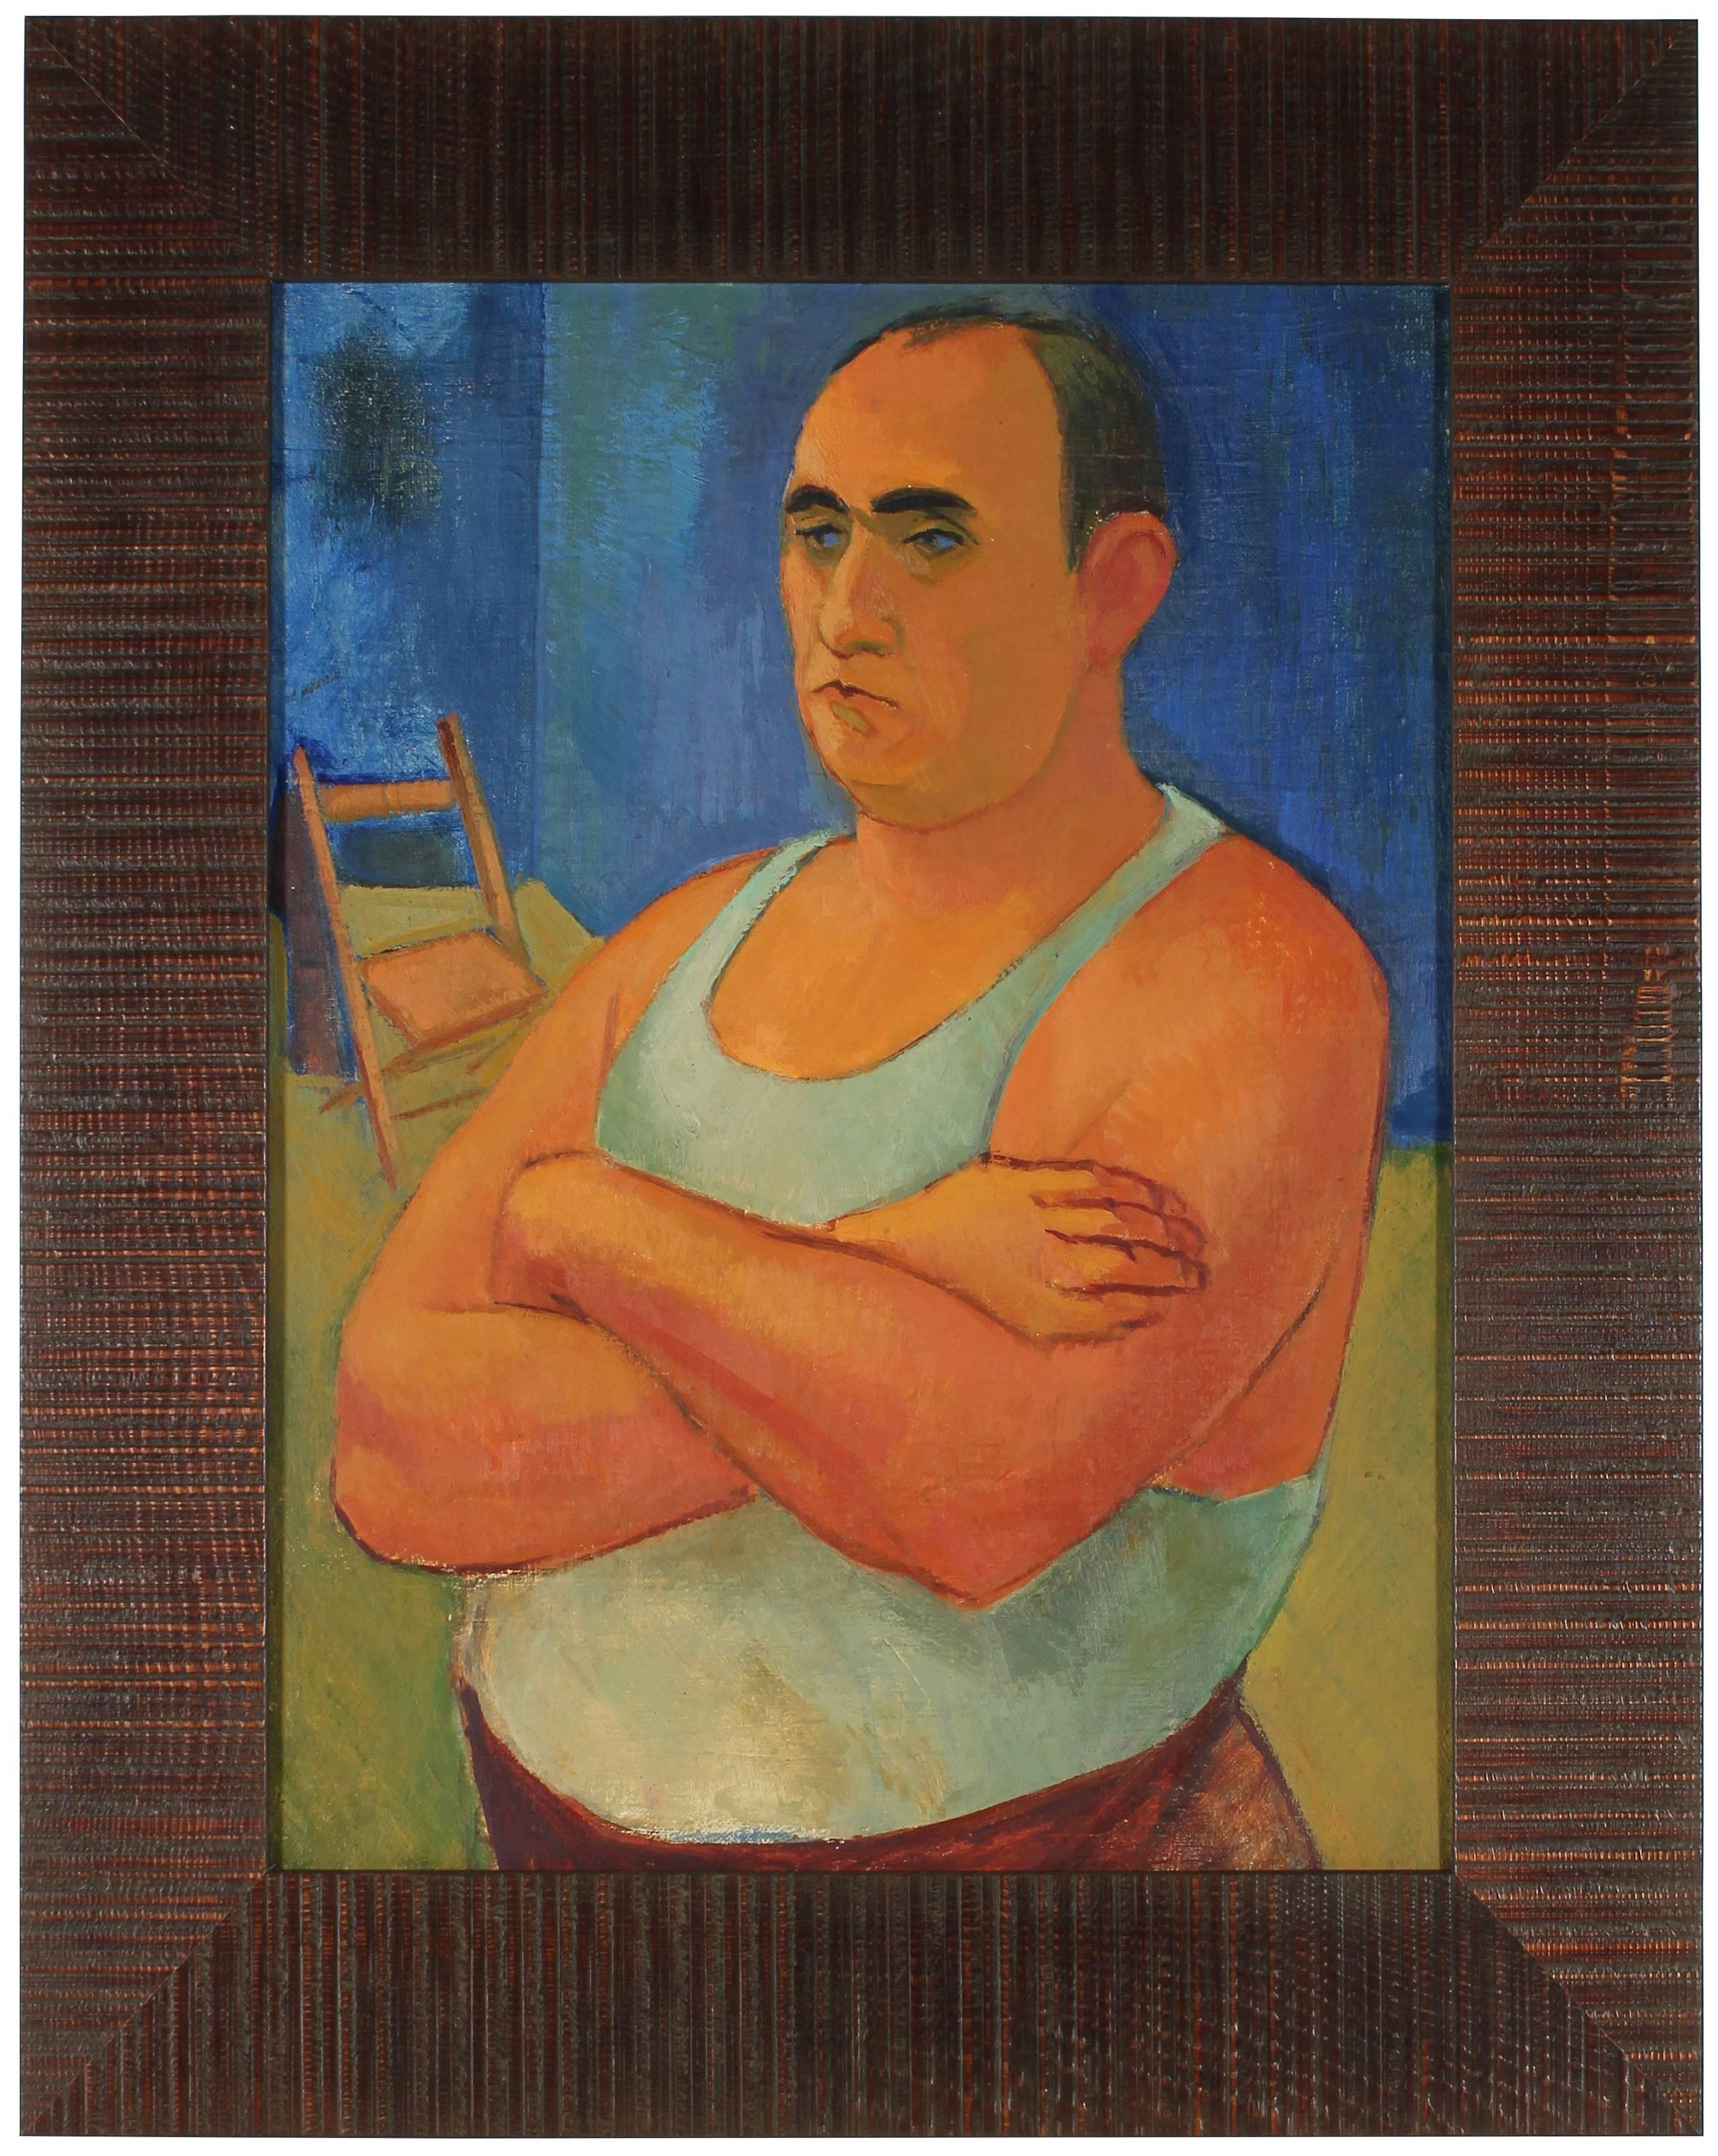 Martin Snipper Portrait Painting - Modernist Portrait of a Man, Oil on Canvas, 1940s